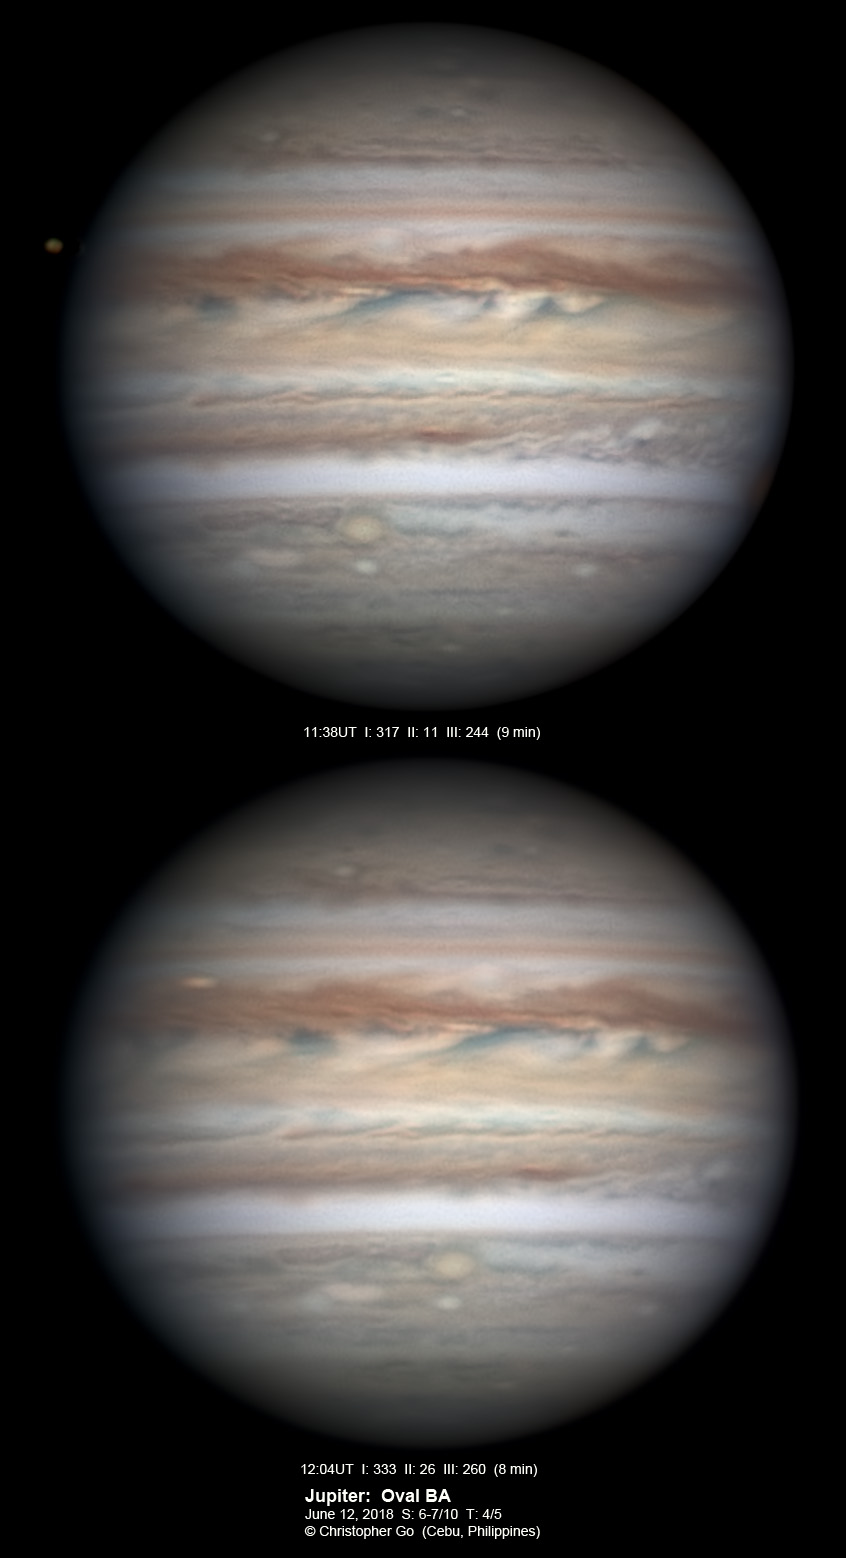 Jupiter 2016-17 by Chris Go